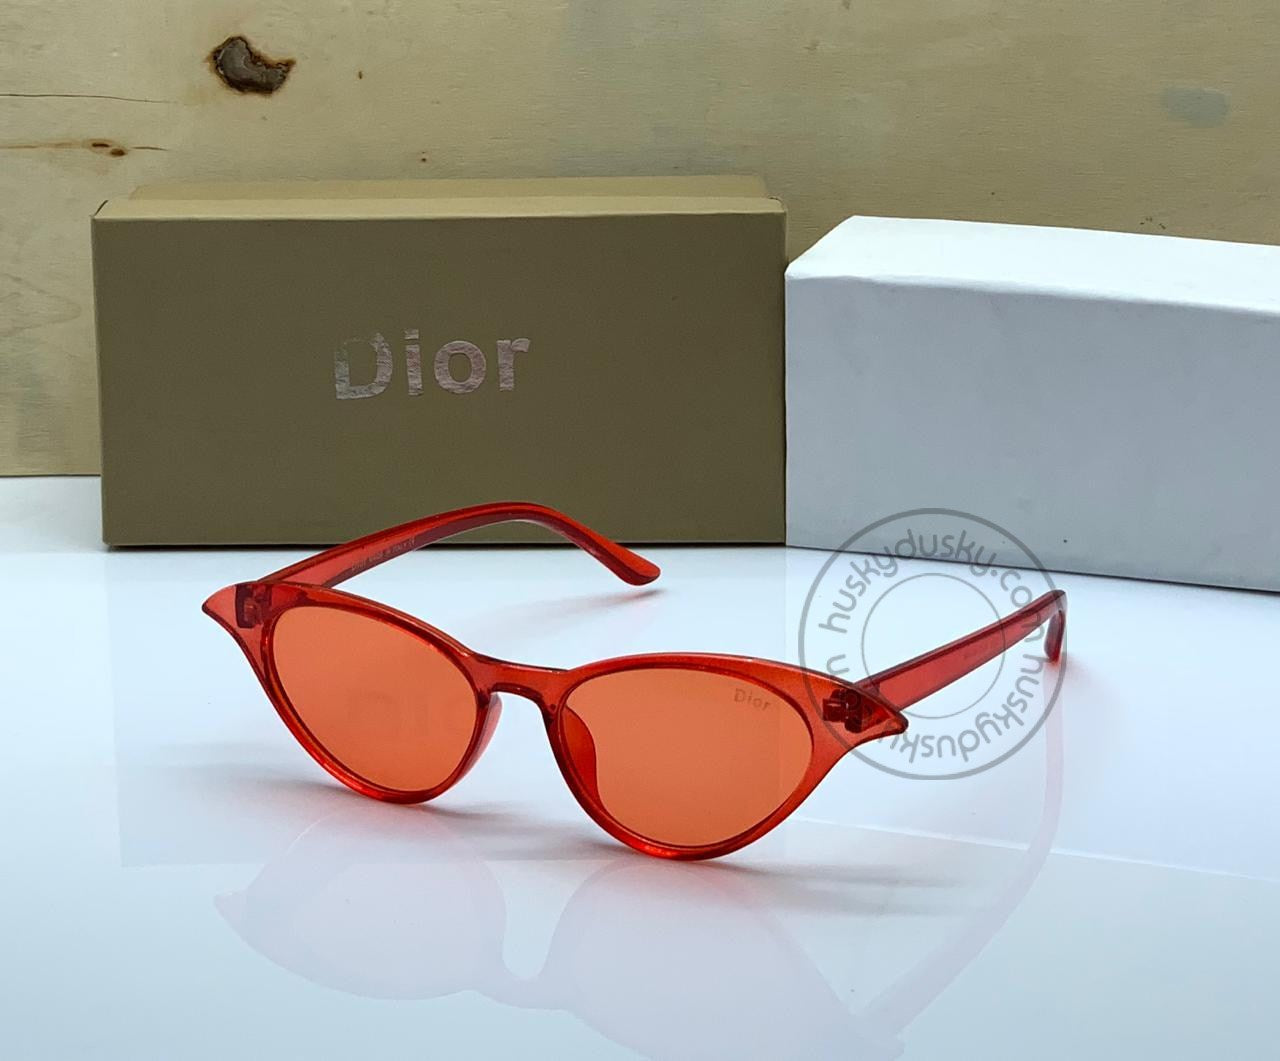 Dior Orange Glass Women's Sunglass for Woman or Girl DR-000 Orange Frame Gift Sunglass